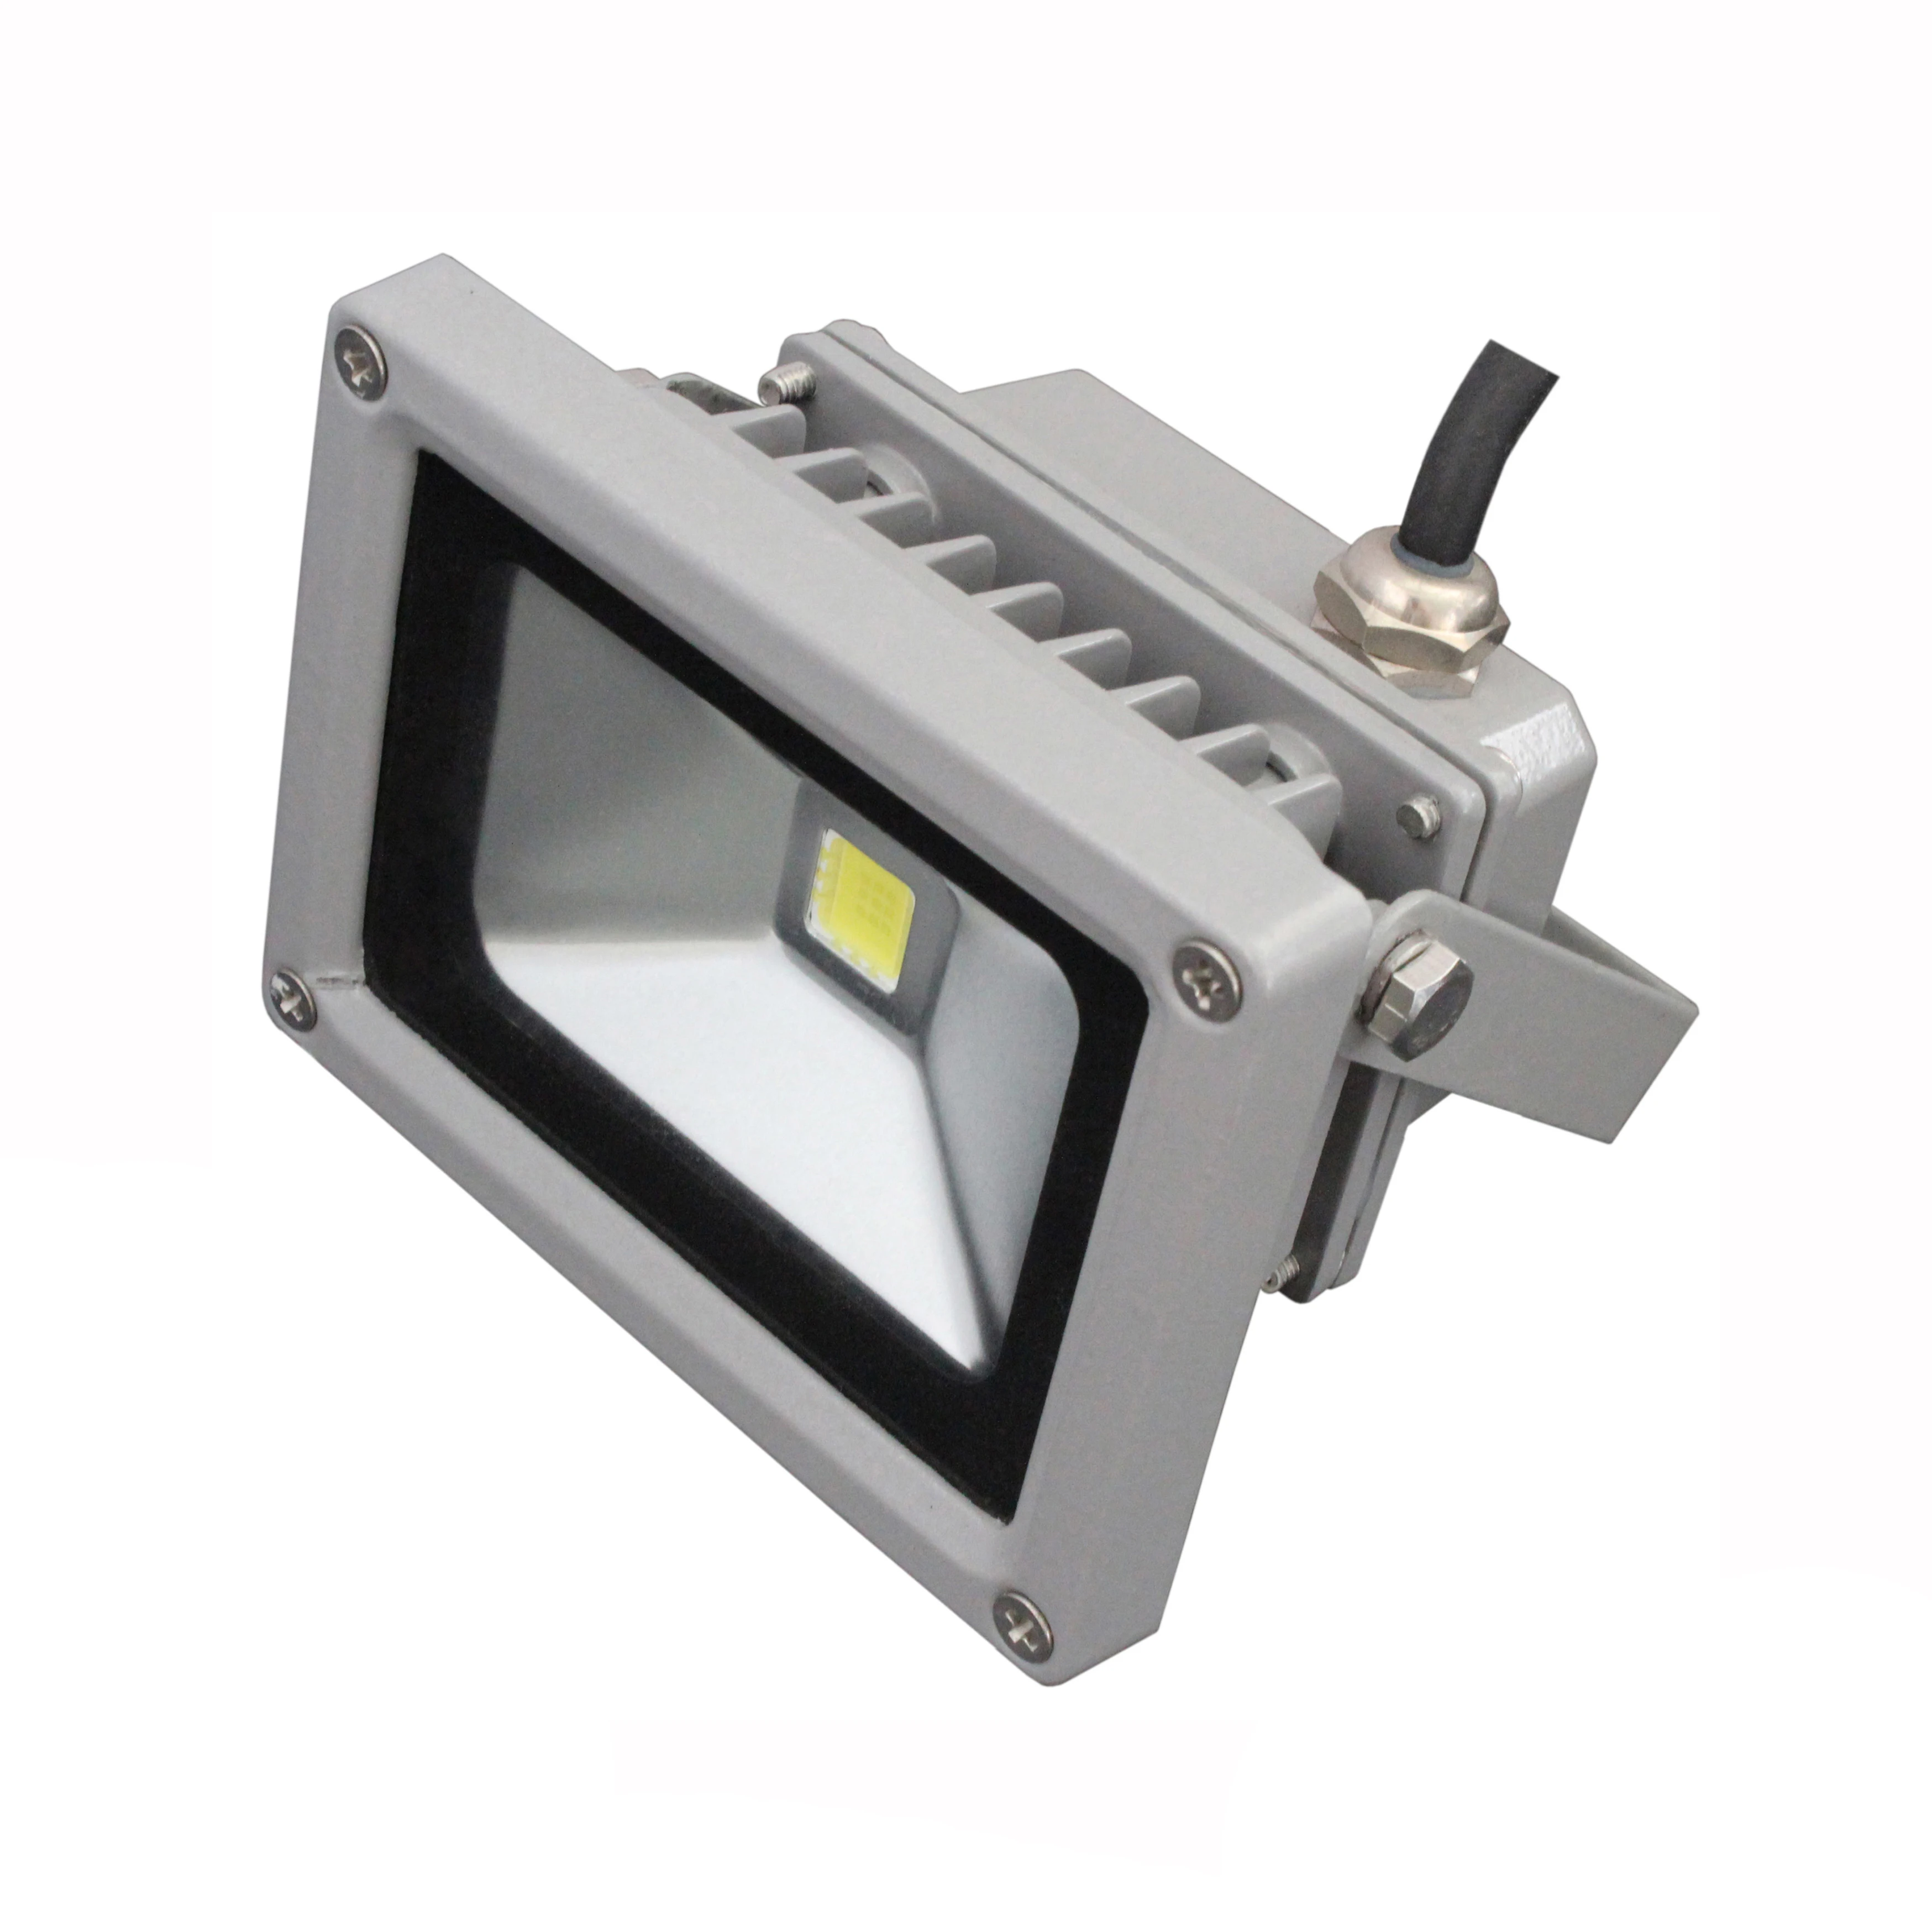 ip65-impermeavel-super-bright-led-projector-luz-de-inundacao-lampada-3-anos-de-garantia-20w-ce-rohs-chip-4pcs